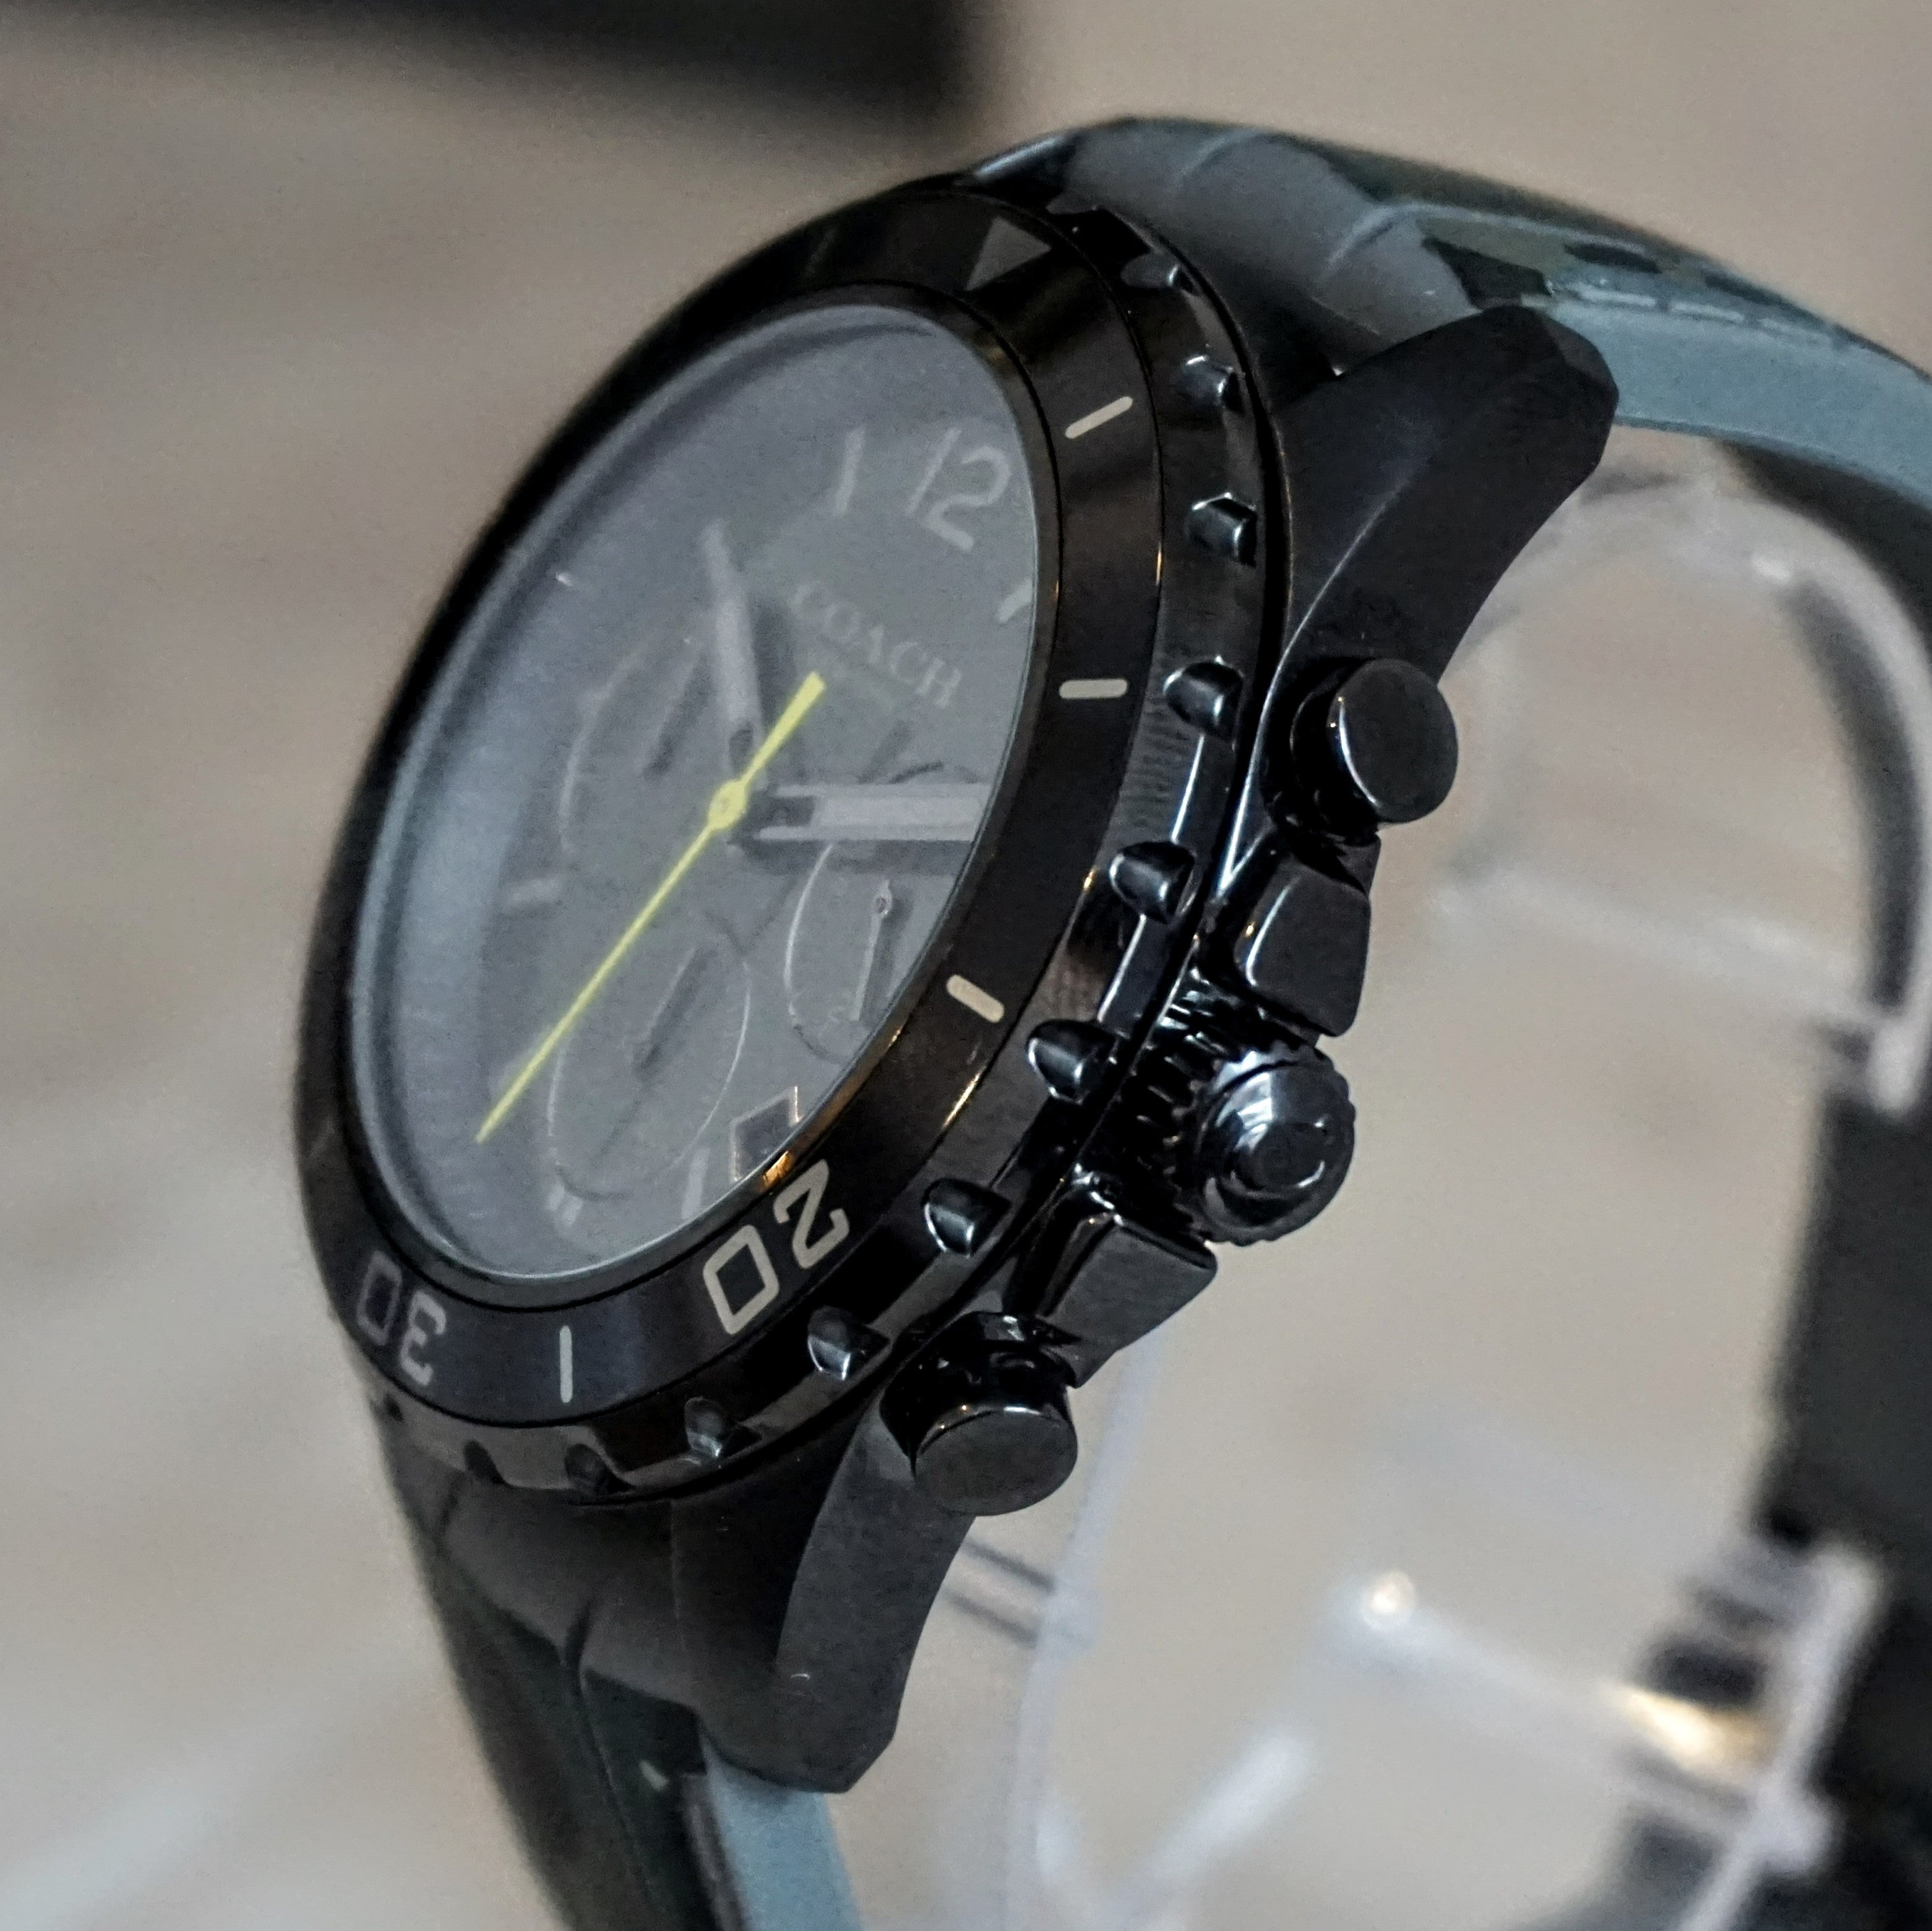 COACH Kent Camo Wristwatch Style No. C7347 Chronograph & Date Watch - Orig. Strap!